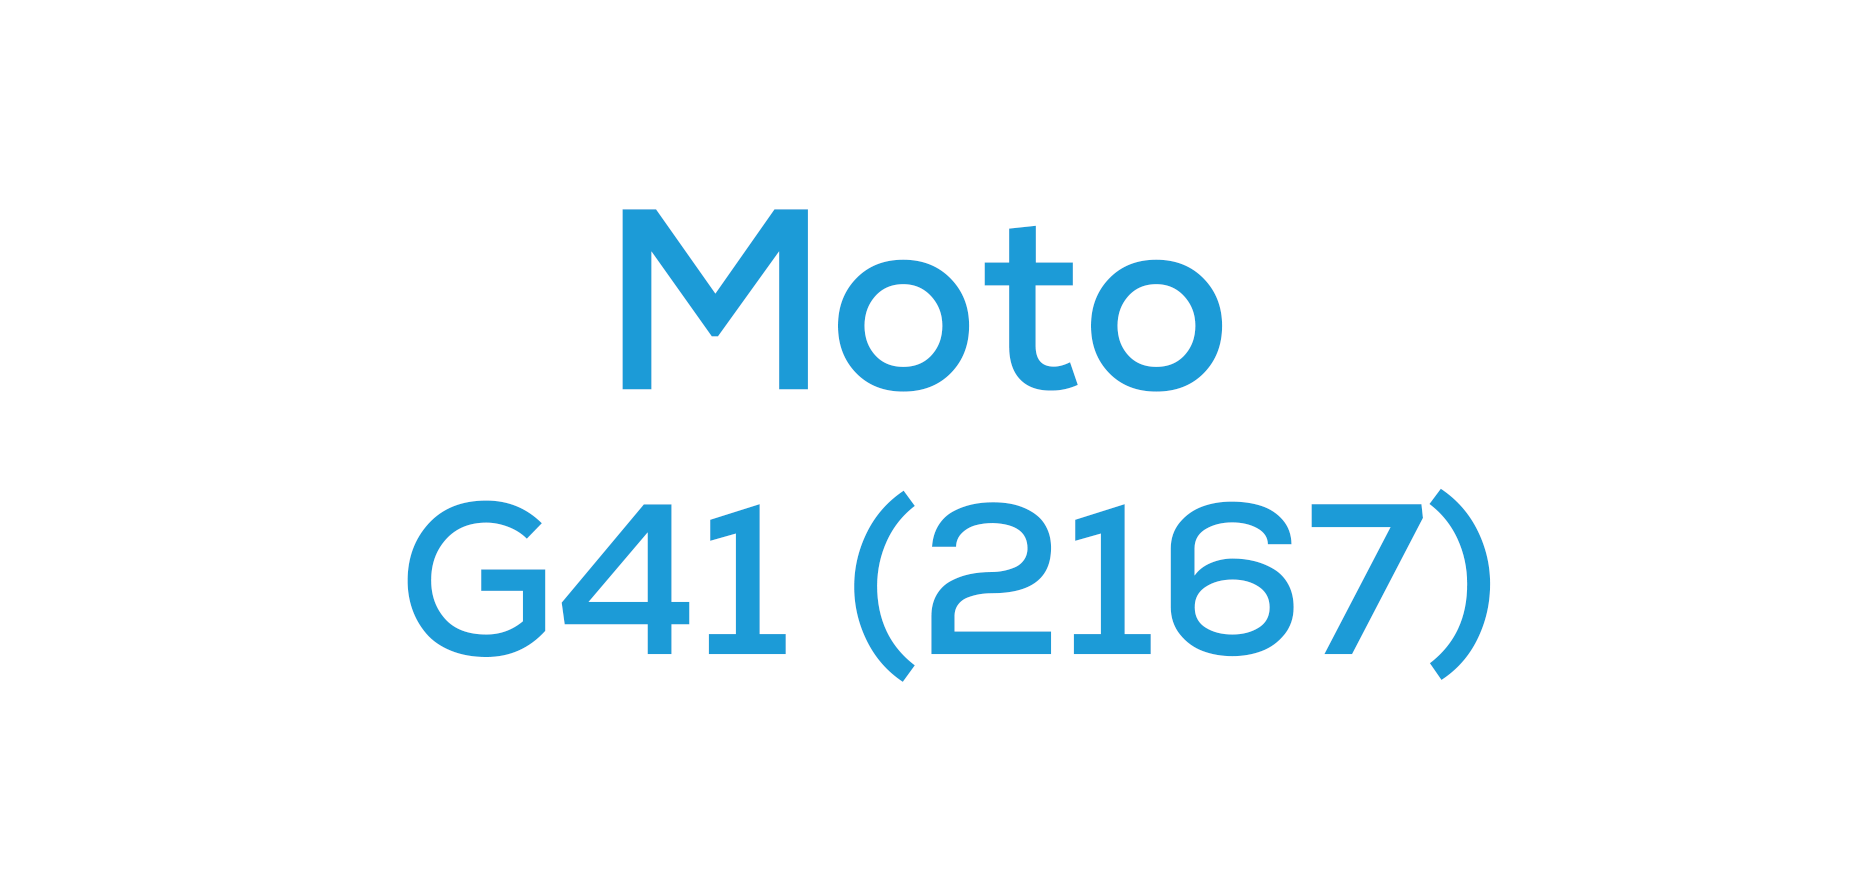 Moto G41 (2167)